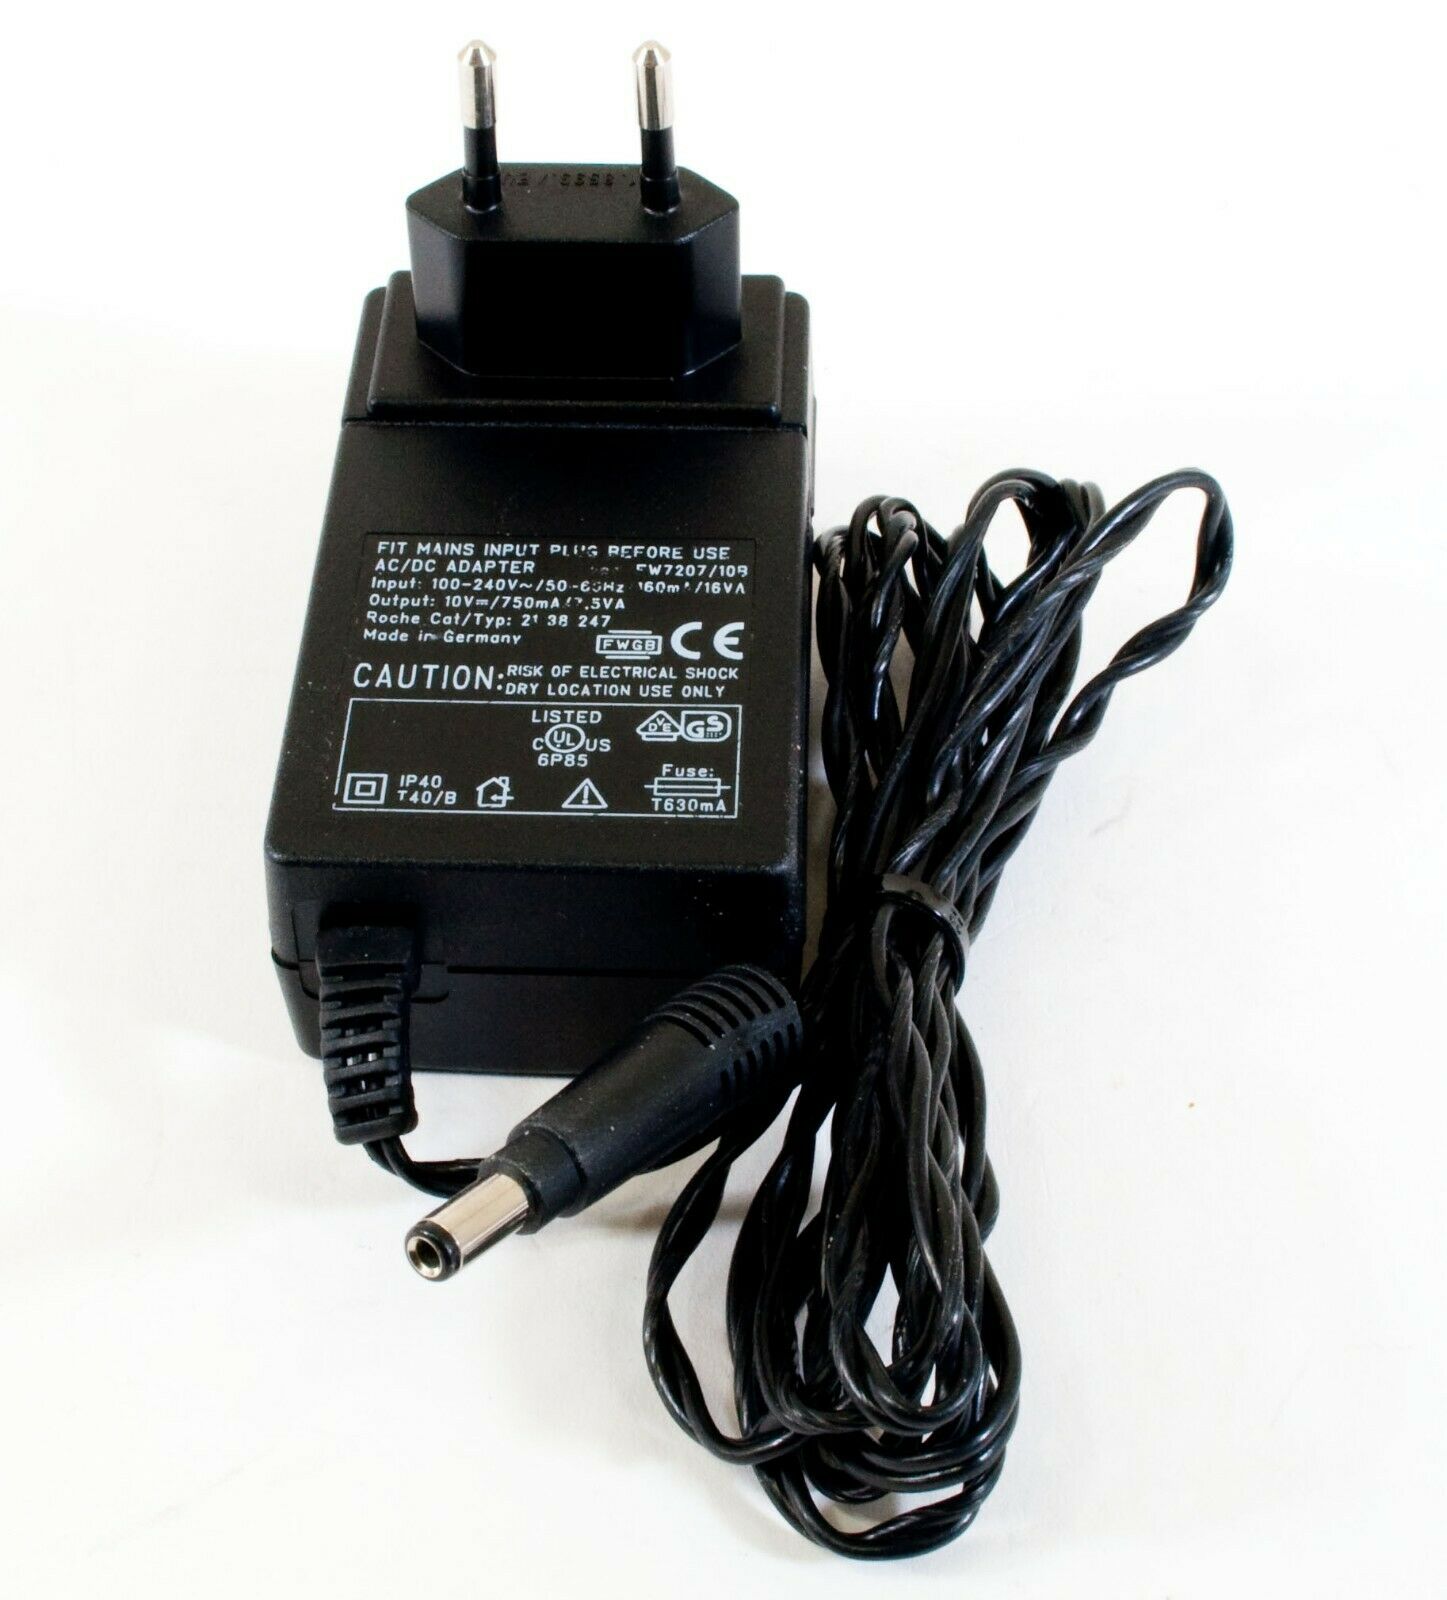 Roche FW7207/10B AC Adapter 10V 750mA Original Power Supply Europlug Output Current: 750 mA MPN: FW7207/10B Brand: